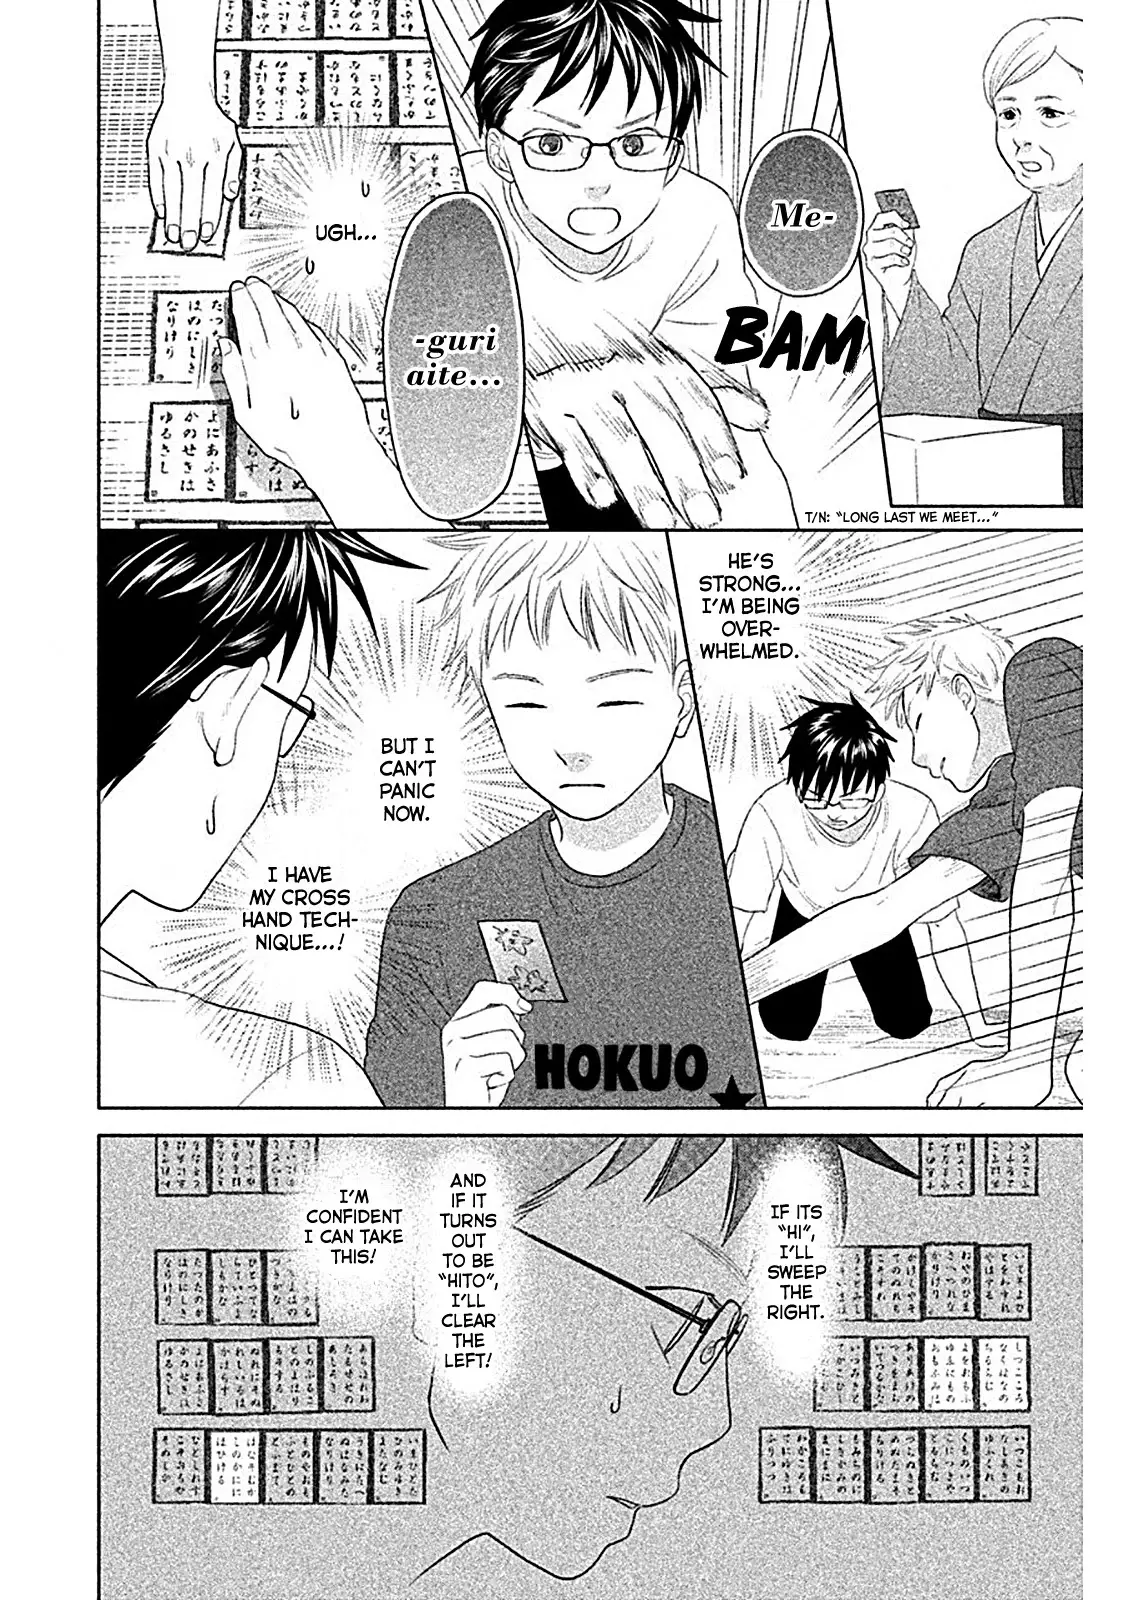 Chihayafuru: Middle School Arc - 6 page 21